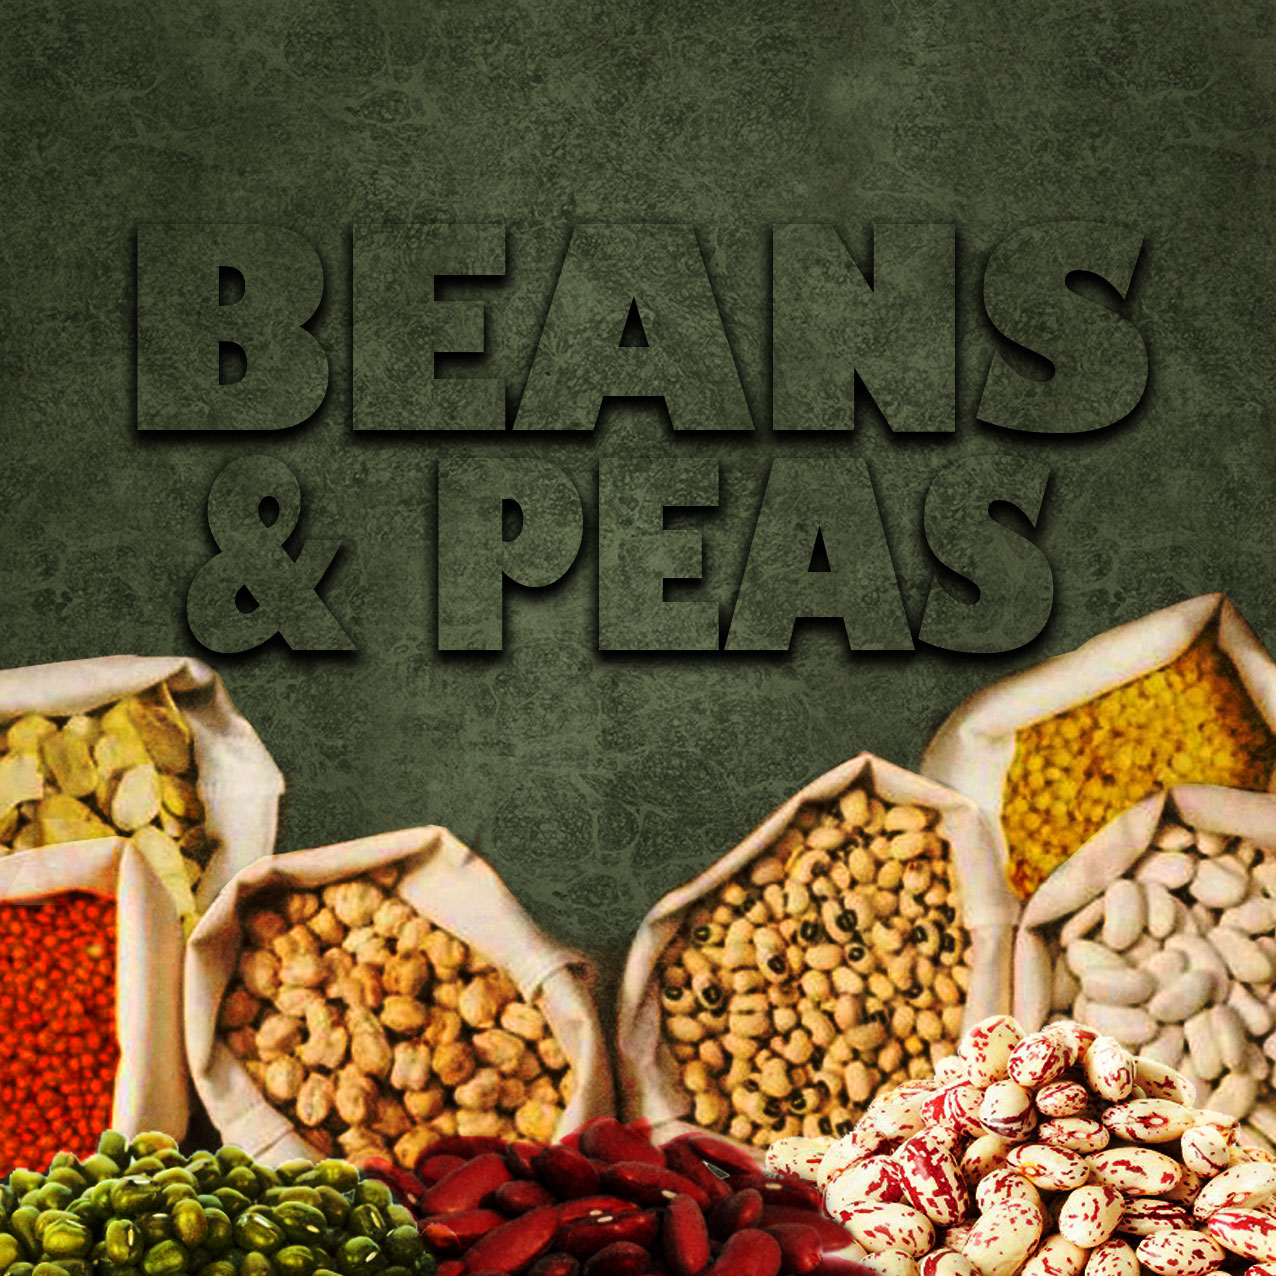 04. Beans & Peas